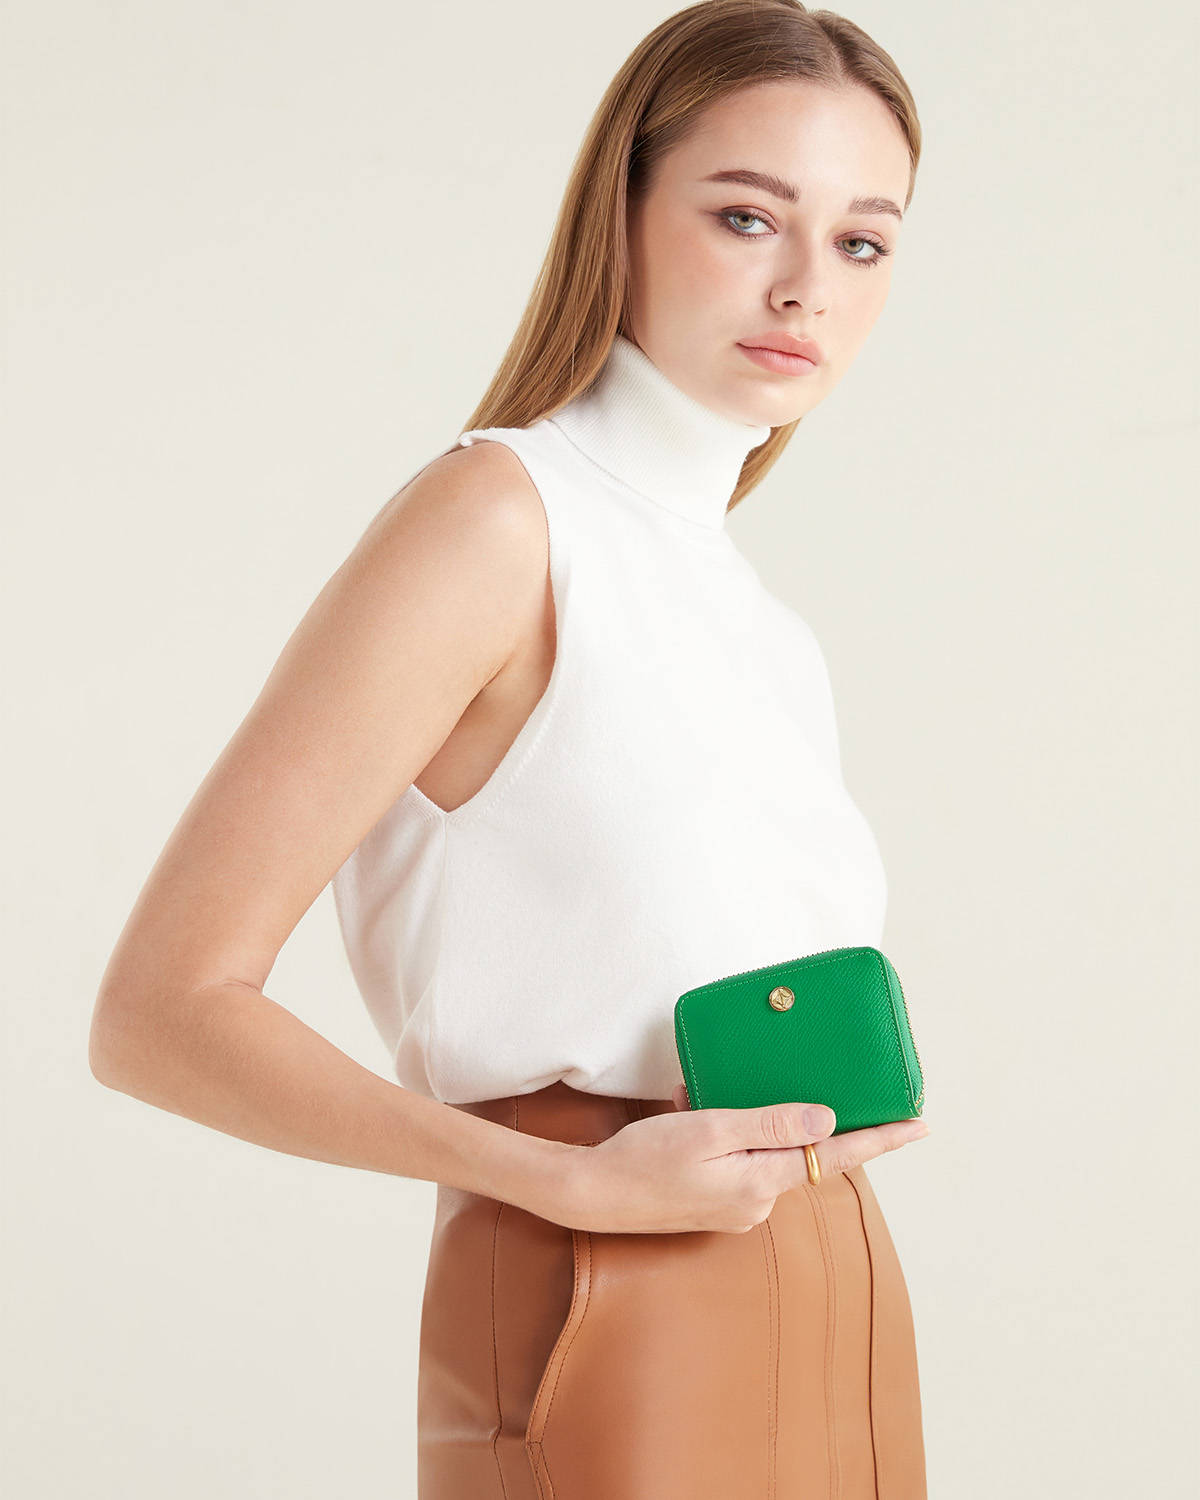 VERA Emily Zipped Wallet in Confident Green กระเป๋าสตางค์หนังแท้ ทรงสั้น ซิปรอบ สีเขียว